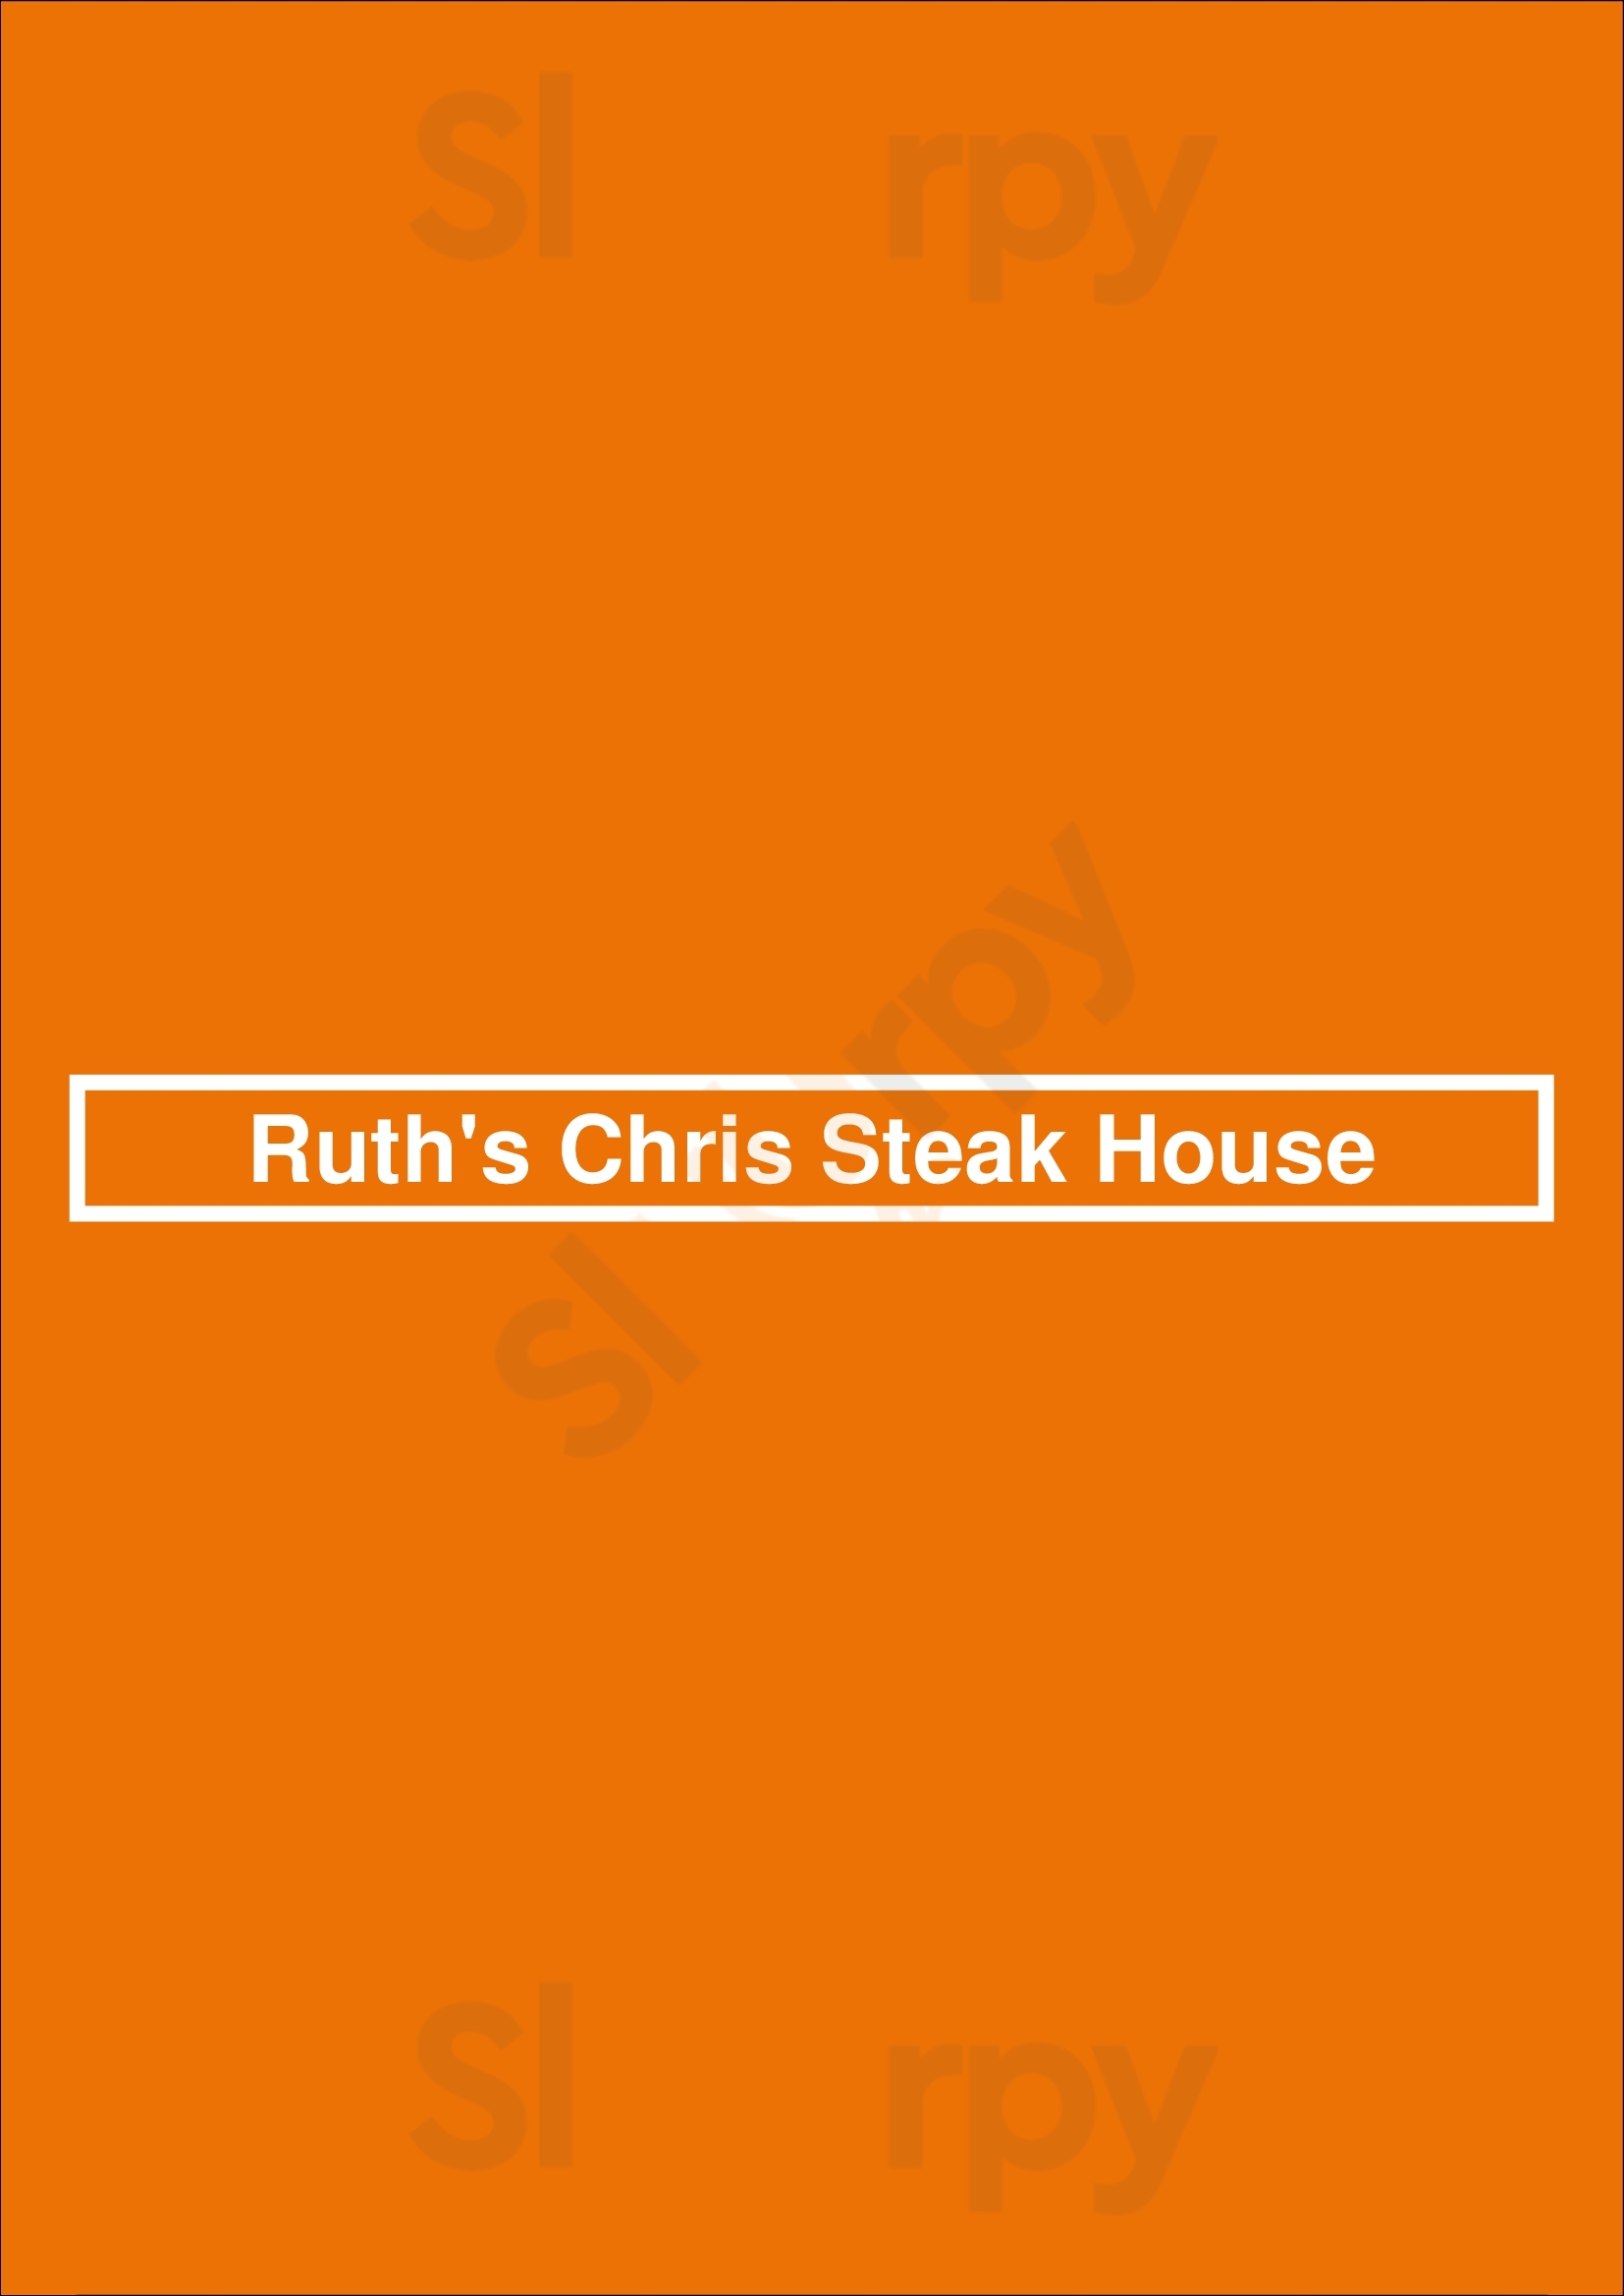 Ruth's Chris Steak House Edmonton Menu - 1